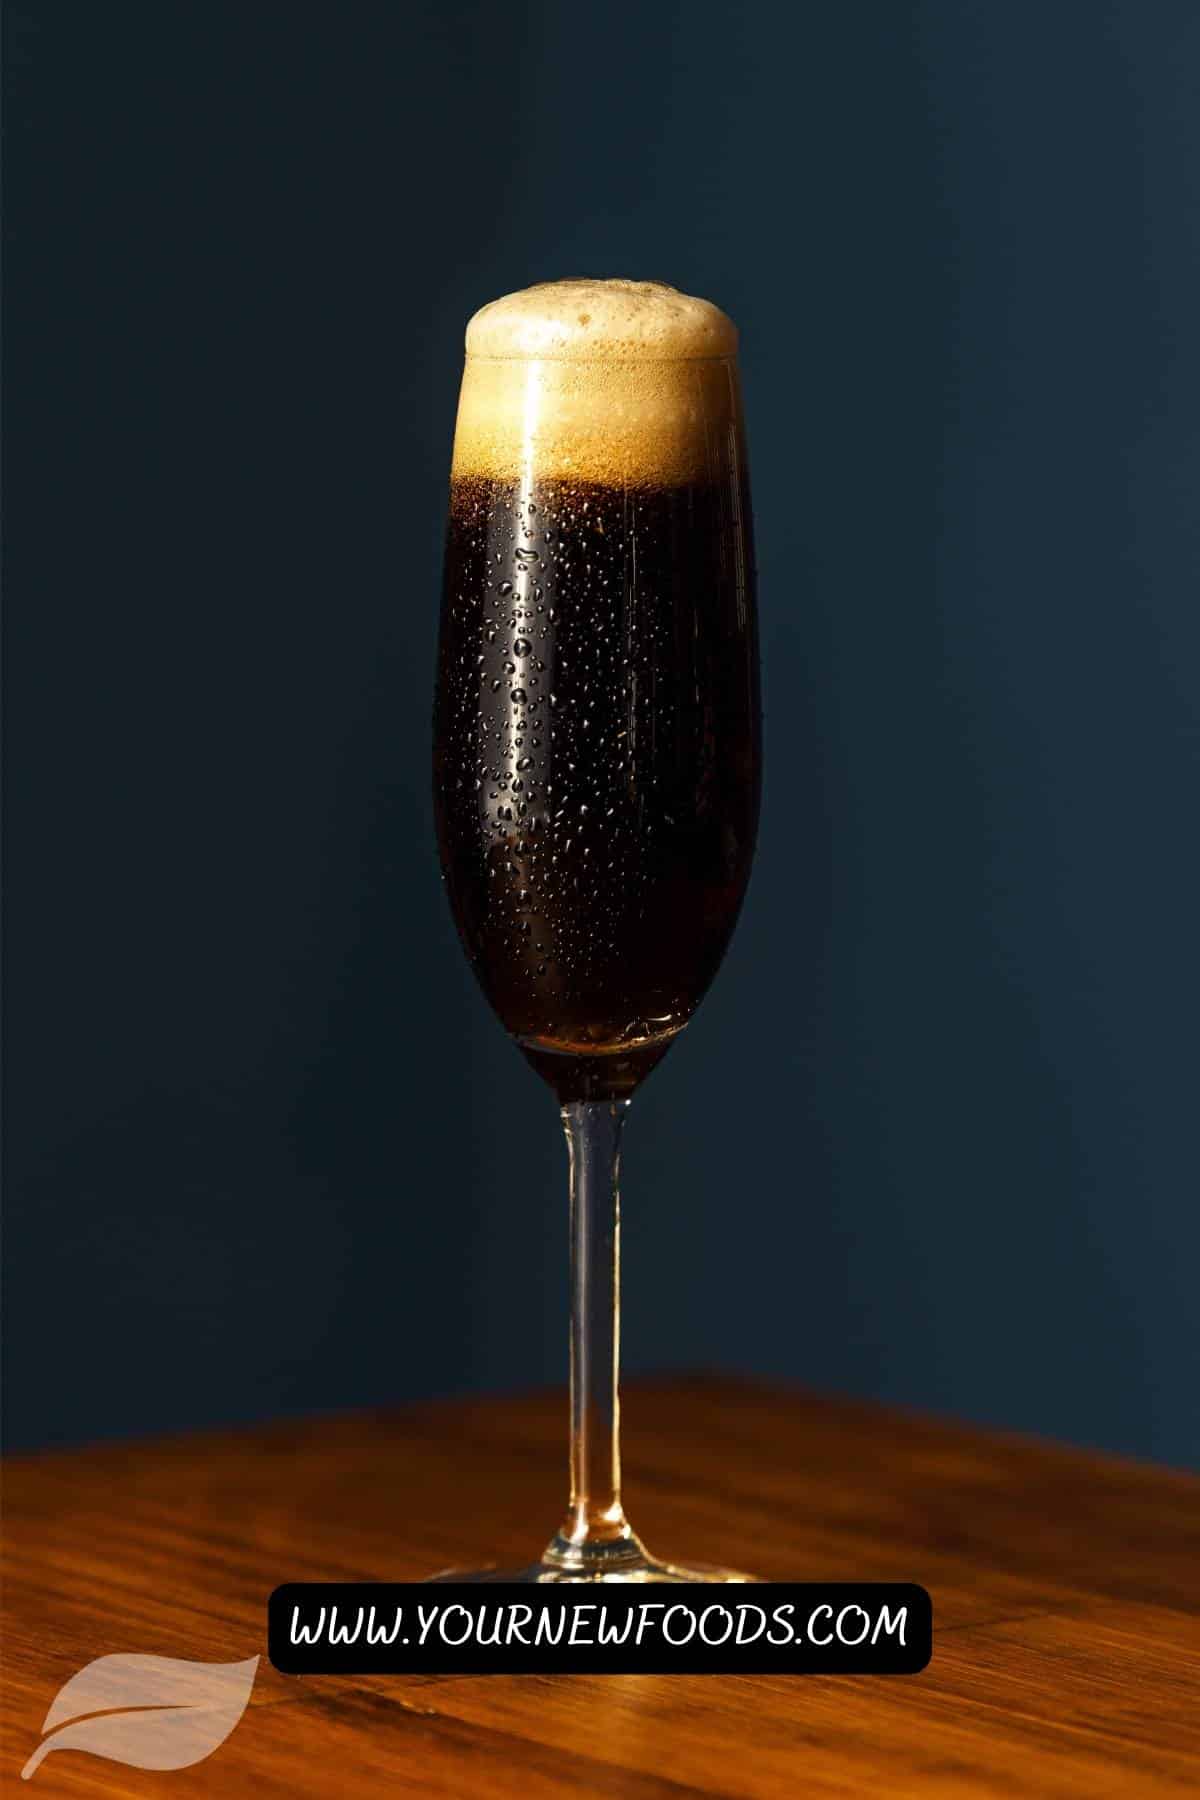 Black velvet cocktail in a champagne flute